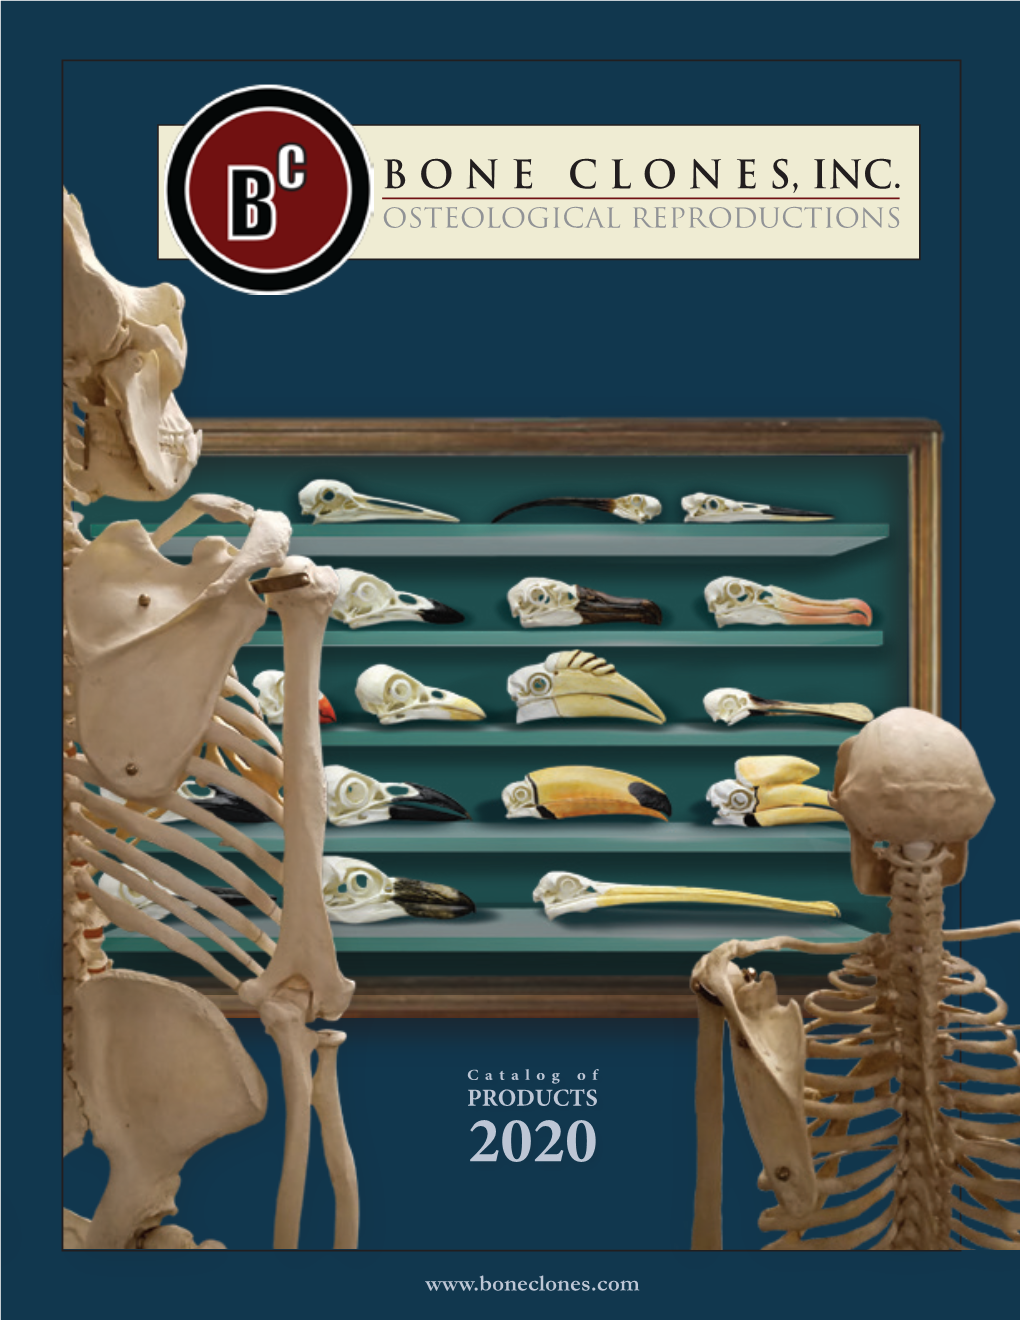 Boneclones, Inc